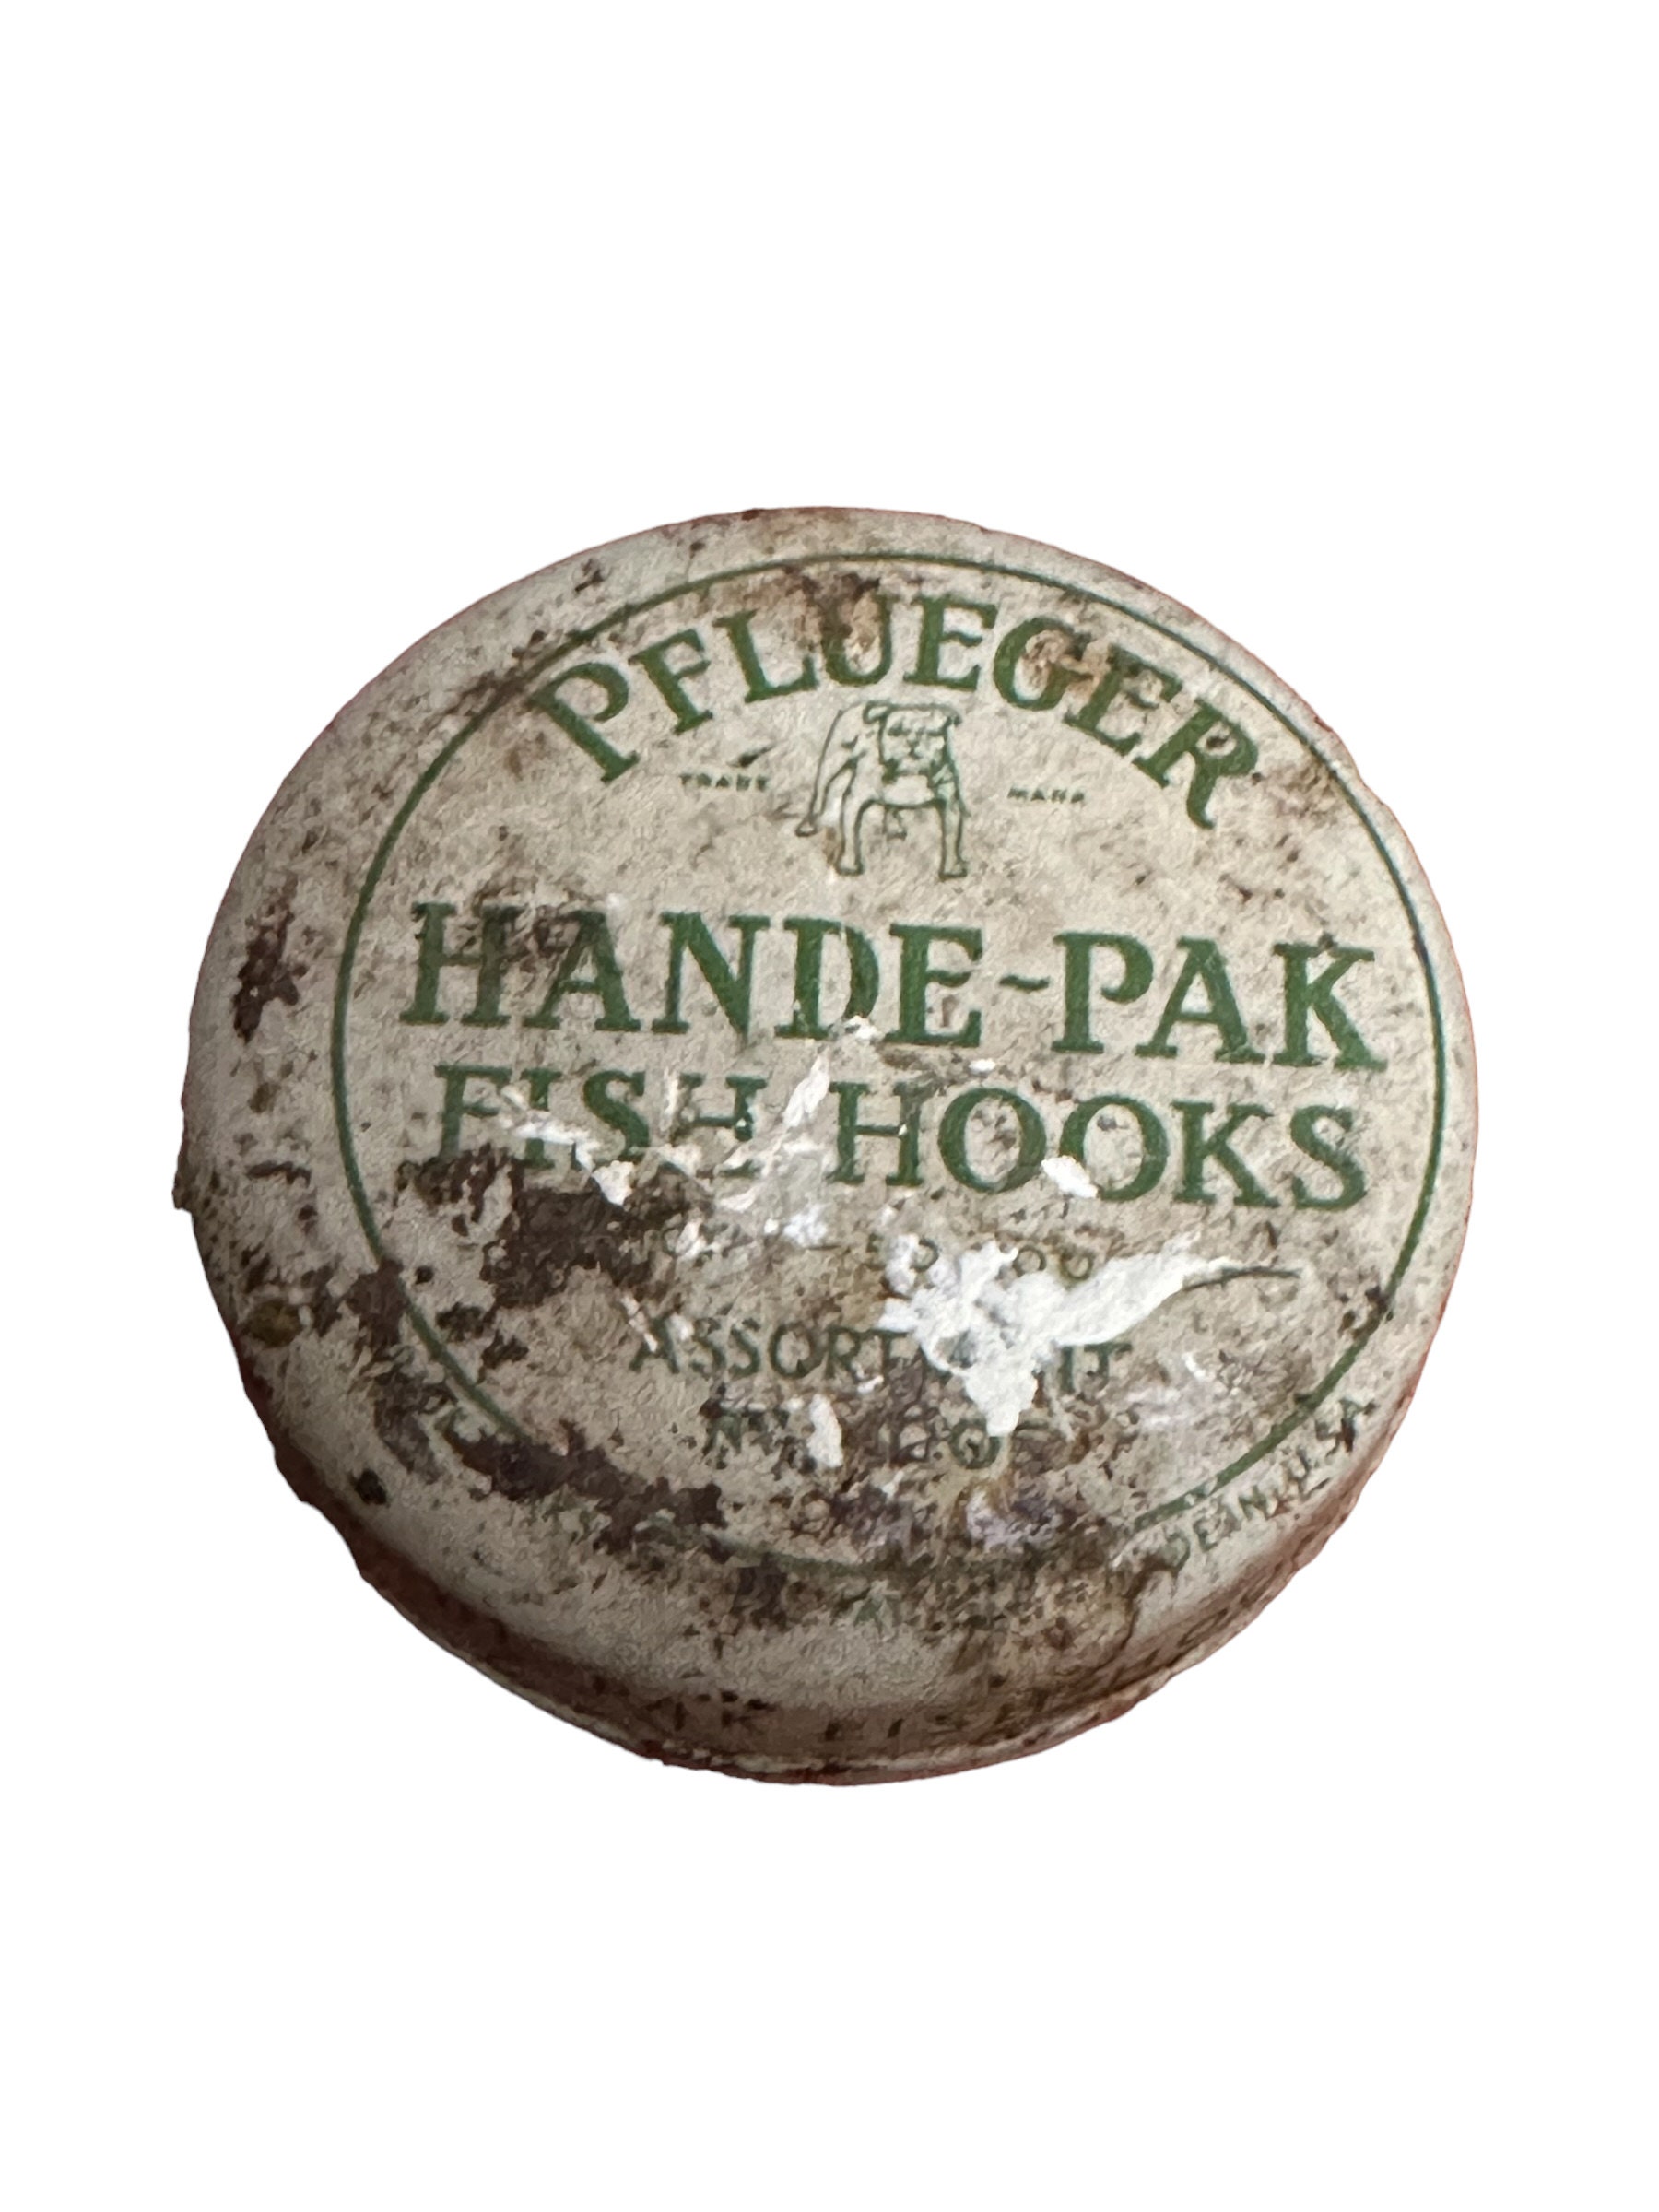 Vintage Pflueger Fish Hooks Hande-pak Assorted Sizes Orginally 50 Hooks  Assortment No. 4005 Fishing for Lakes and Streams 